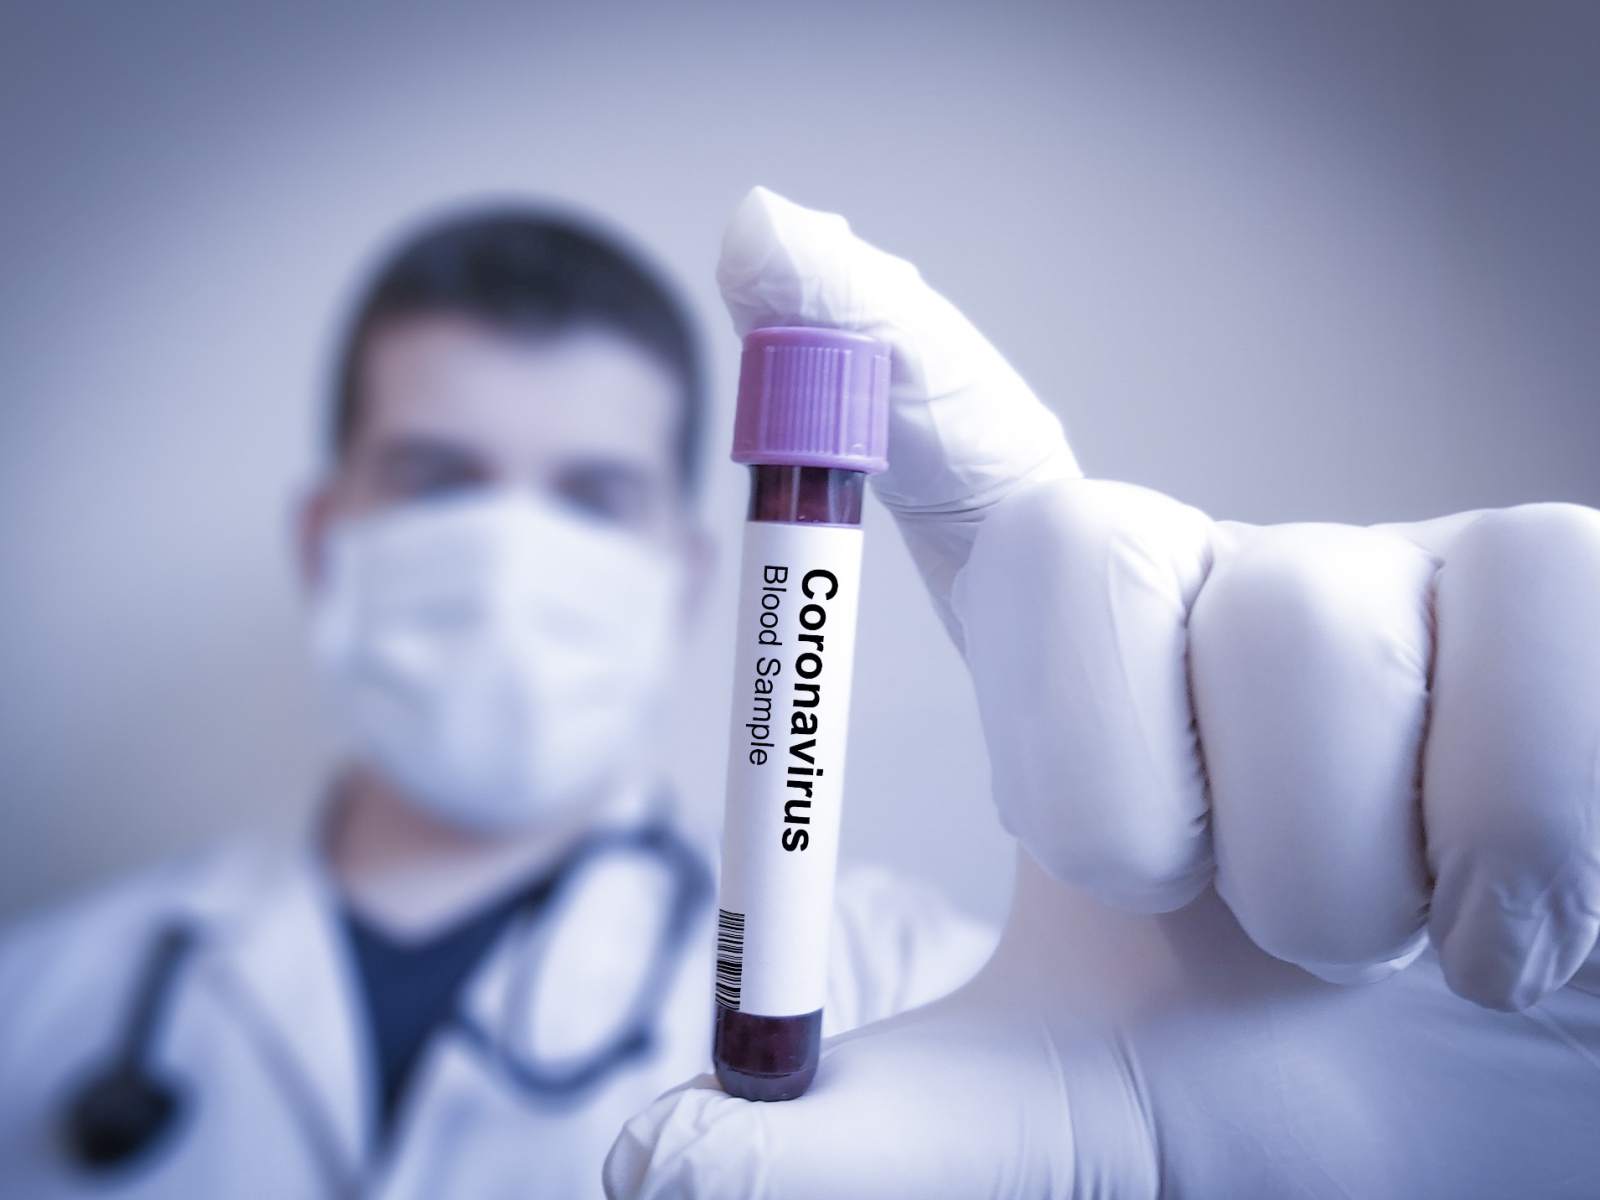 Assay for coronavirus covid-19 in vitro in hand